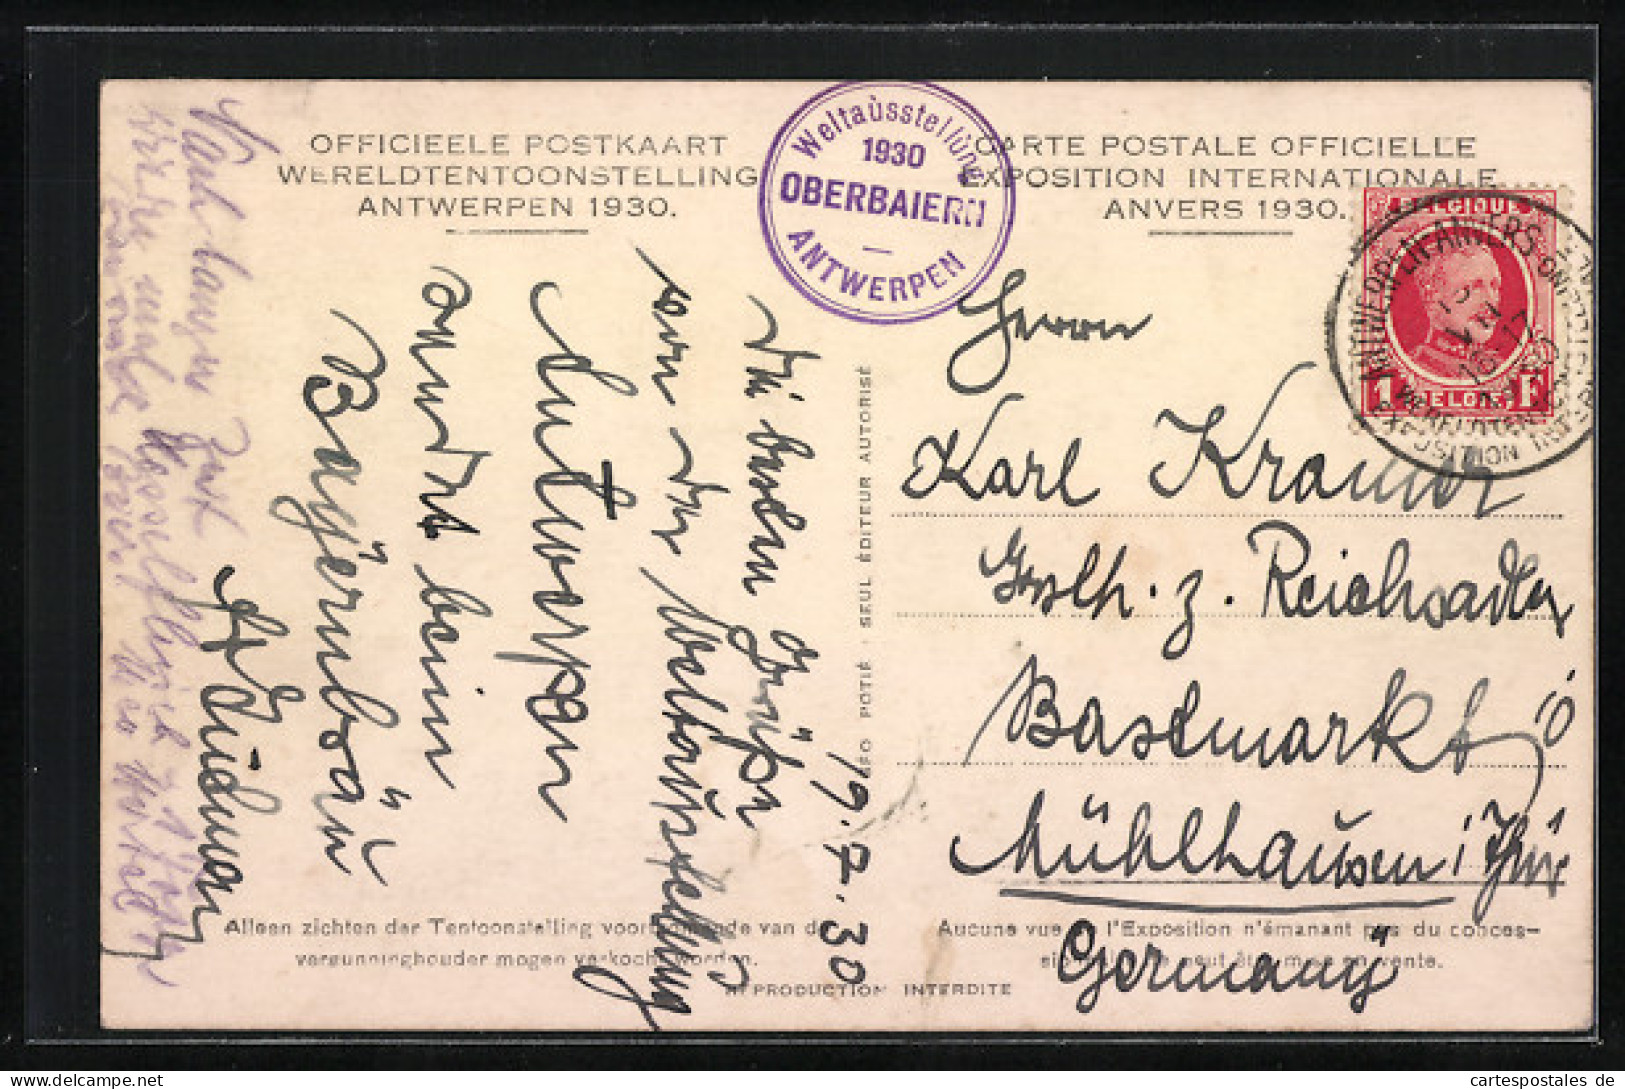 AK Anvers, Wereldtentoonstelling 1930, Luna Park, Oberbaiern  - Exposiciones